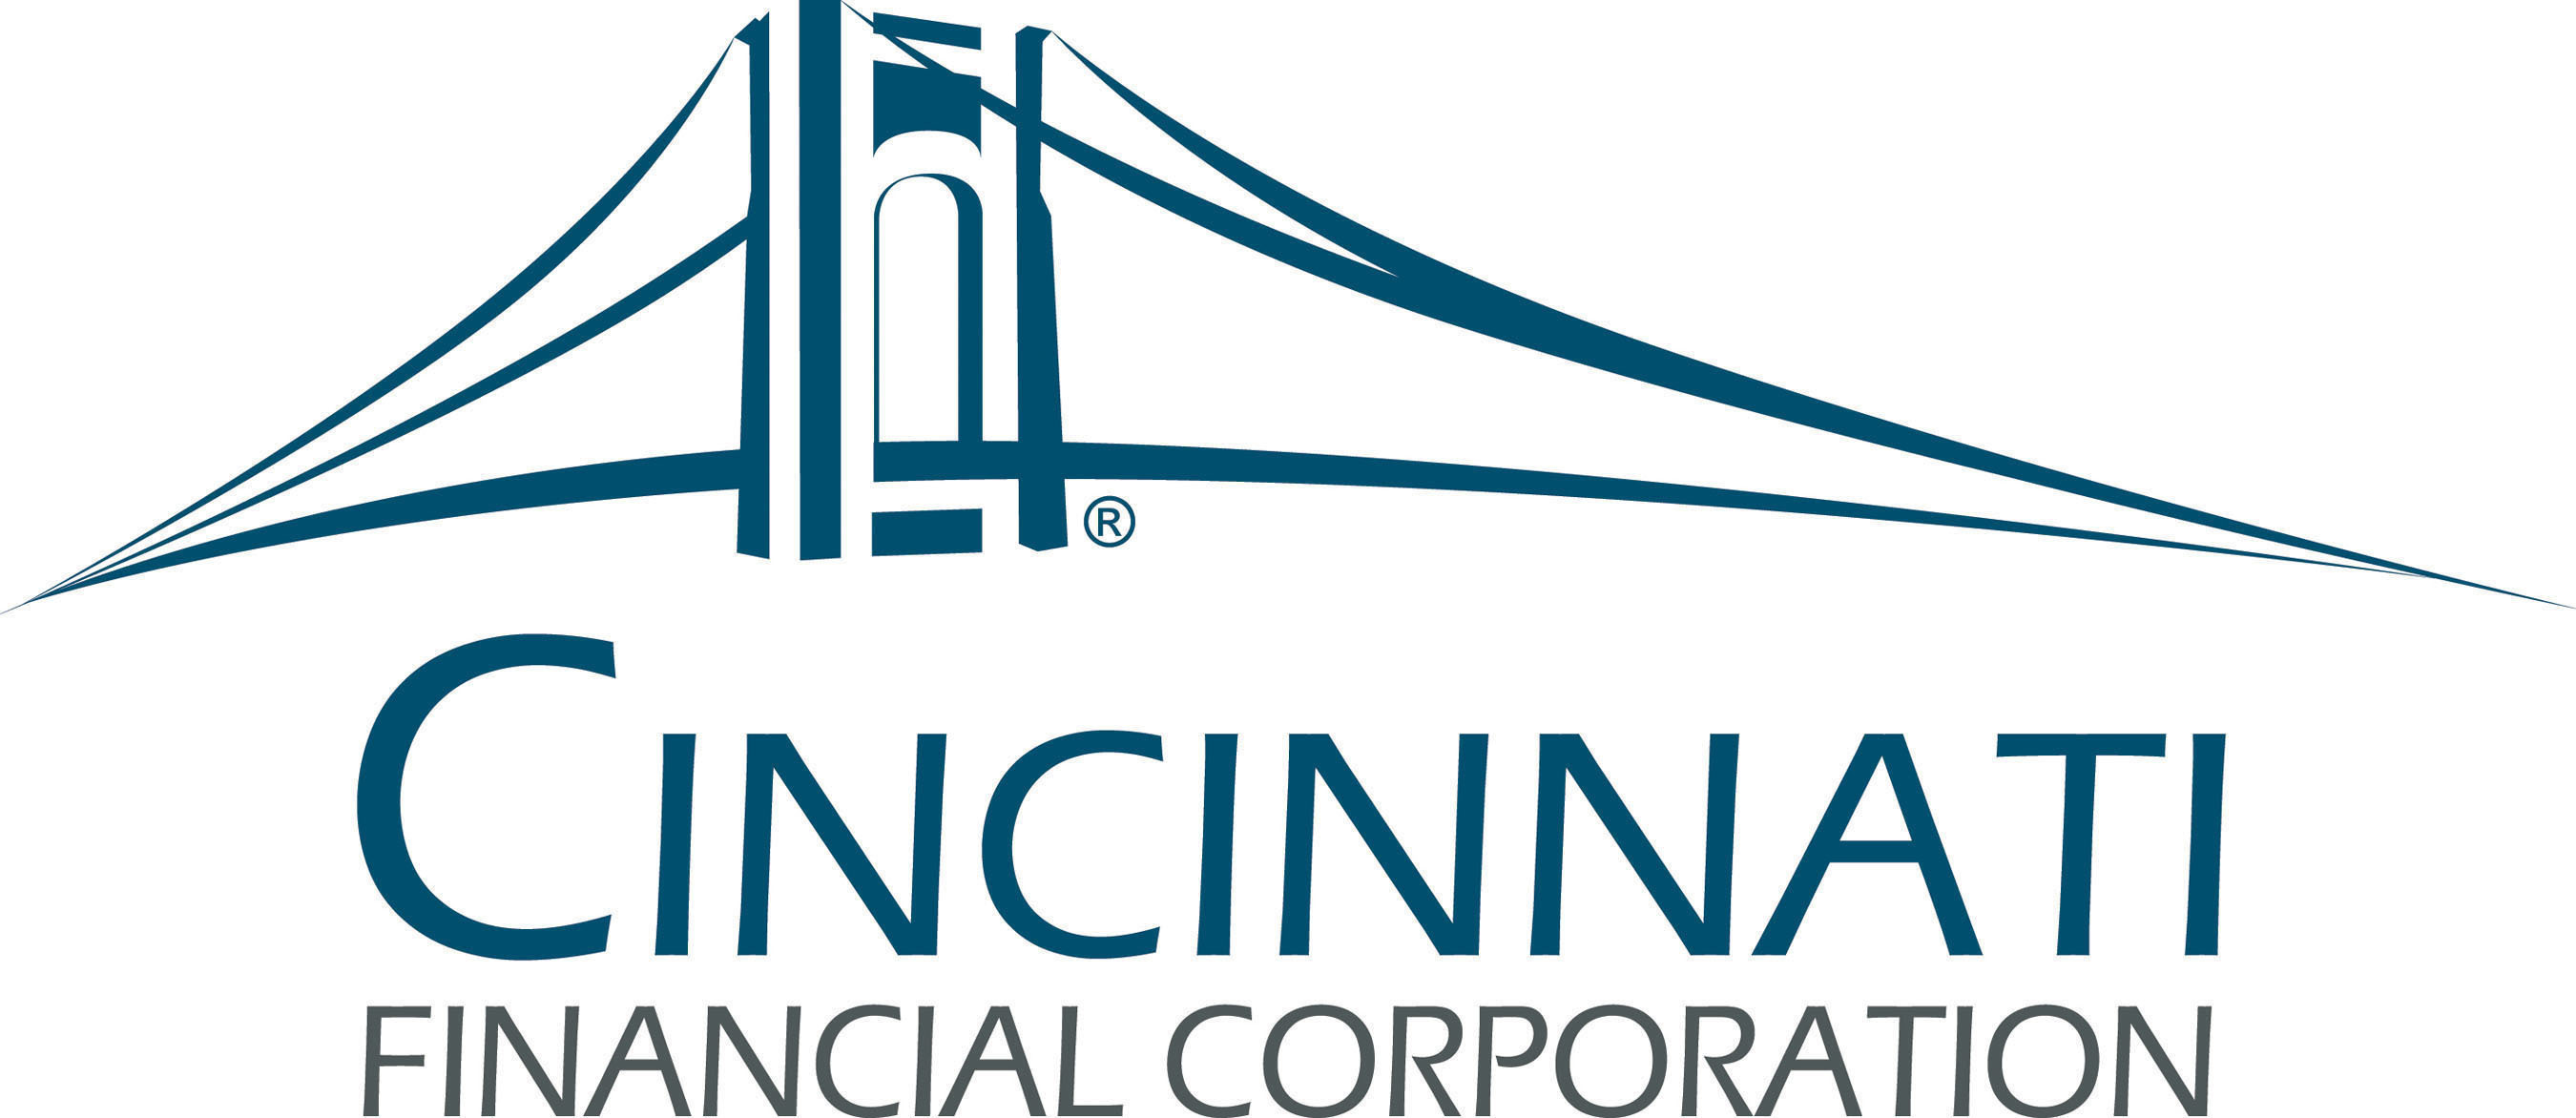 Cincinnati Financial Corporation logo.